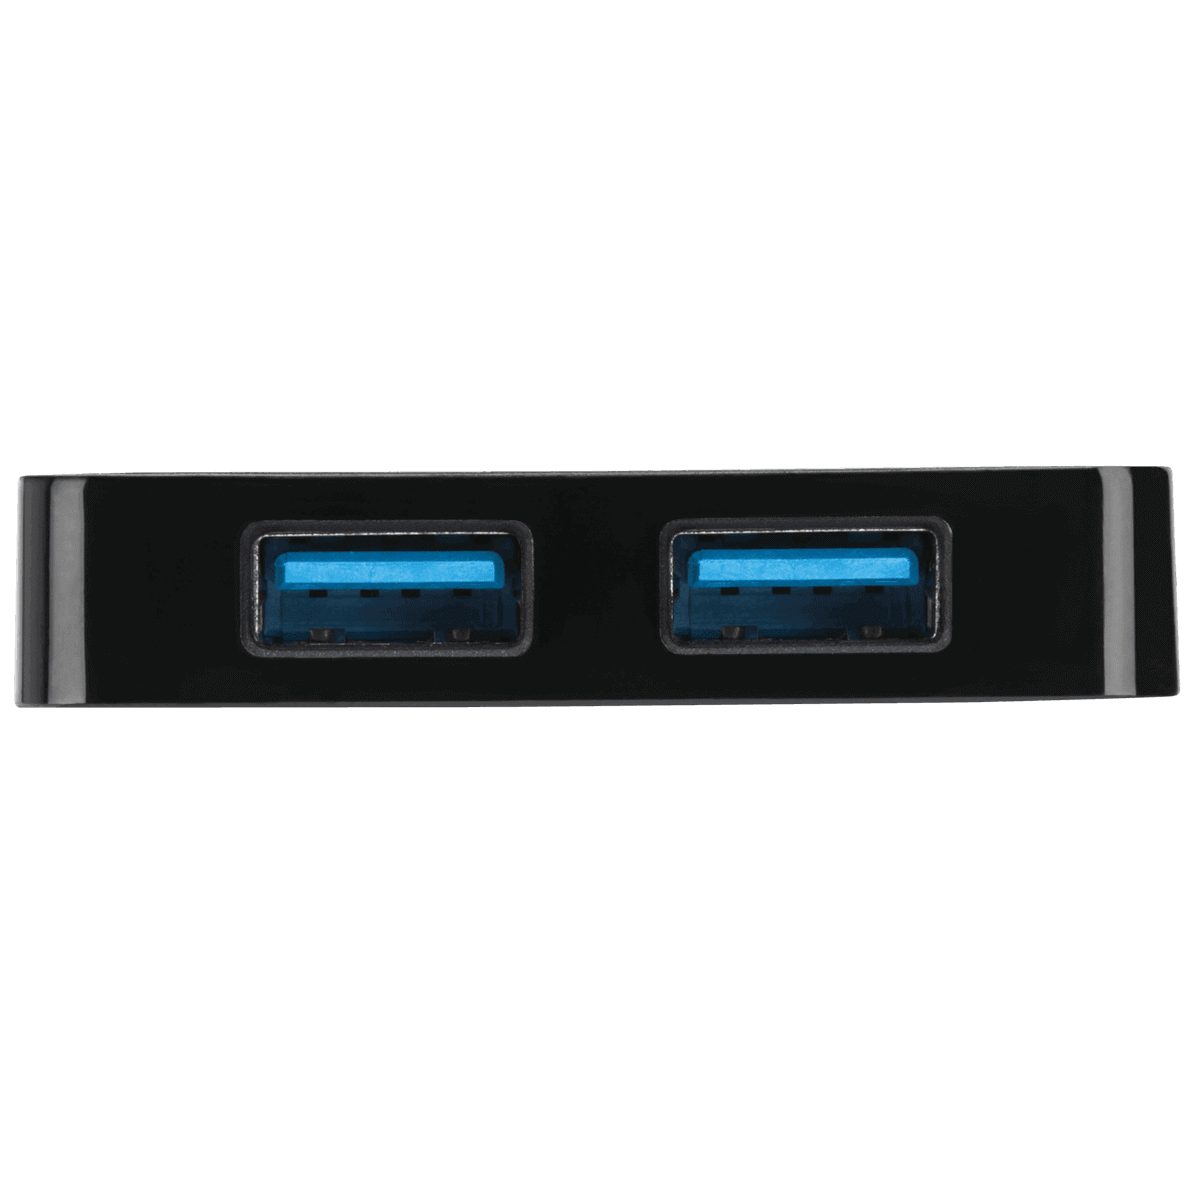 10-Port USB 3.0 USB 2.0 Combo Hub 2 USB 3.0 & 8 USB 2.0 Ports